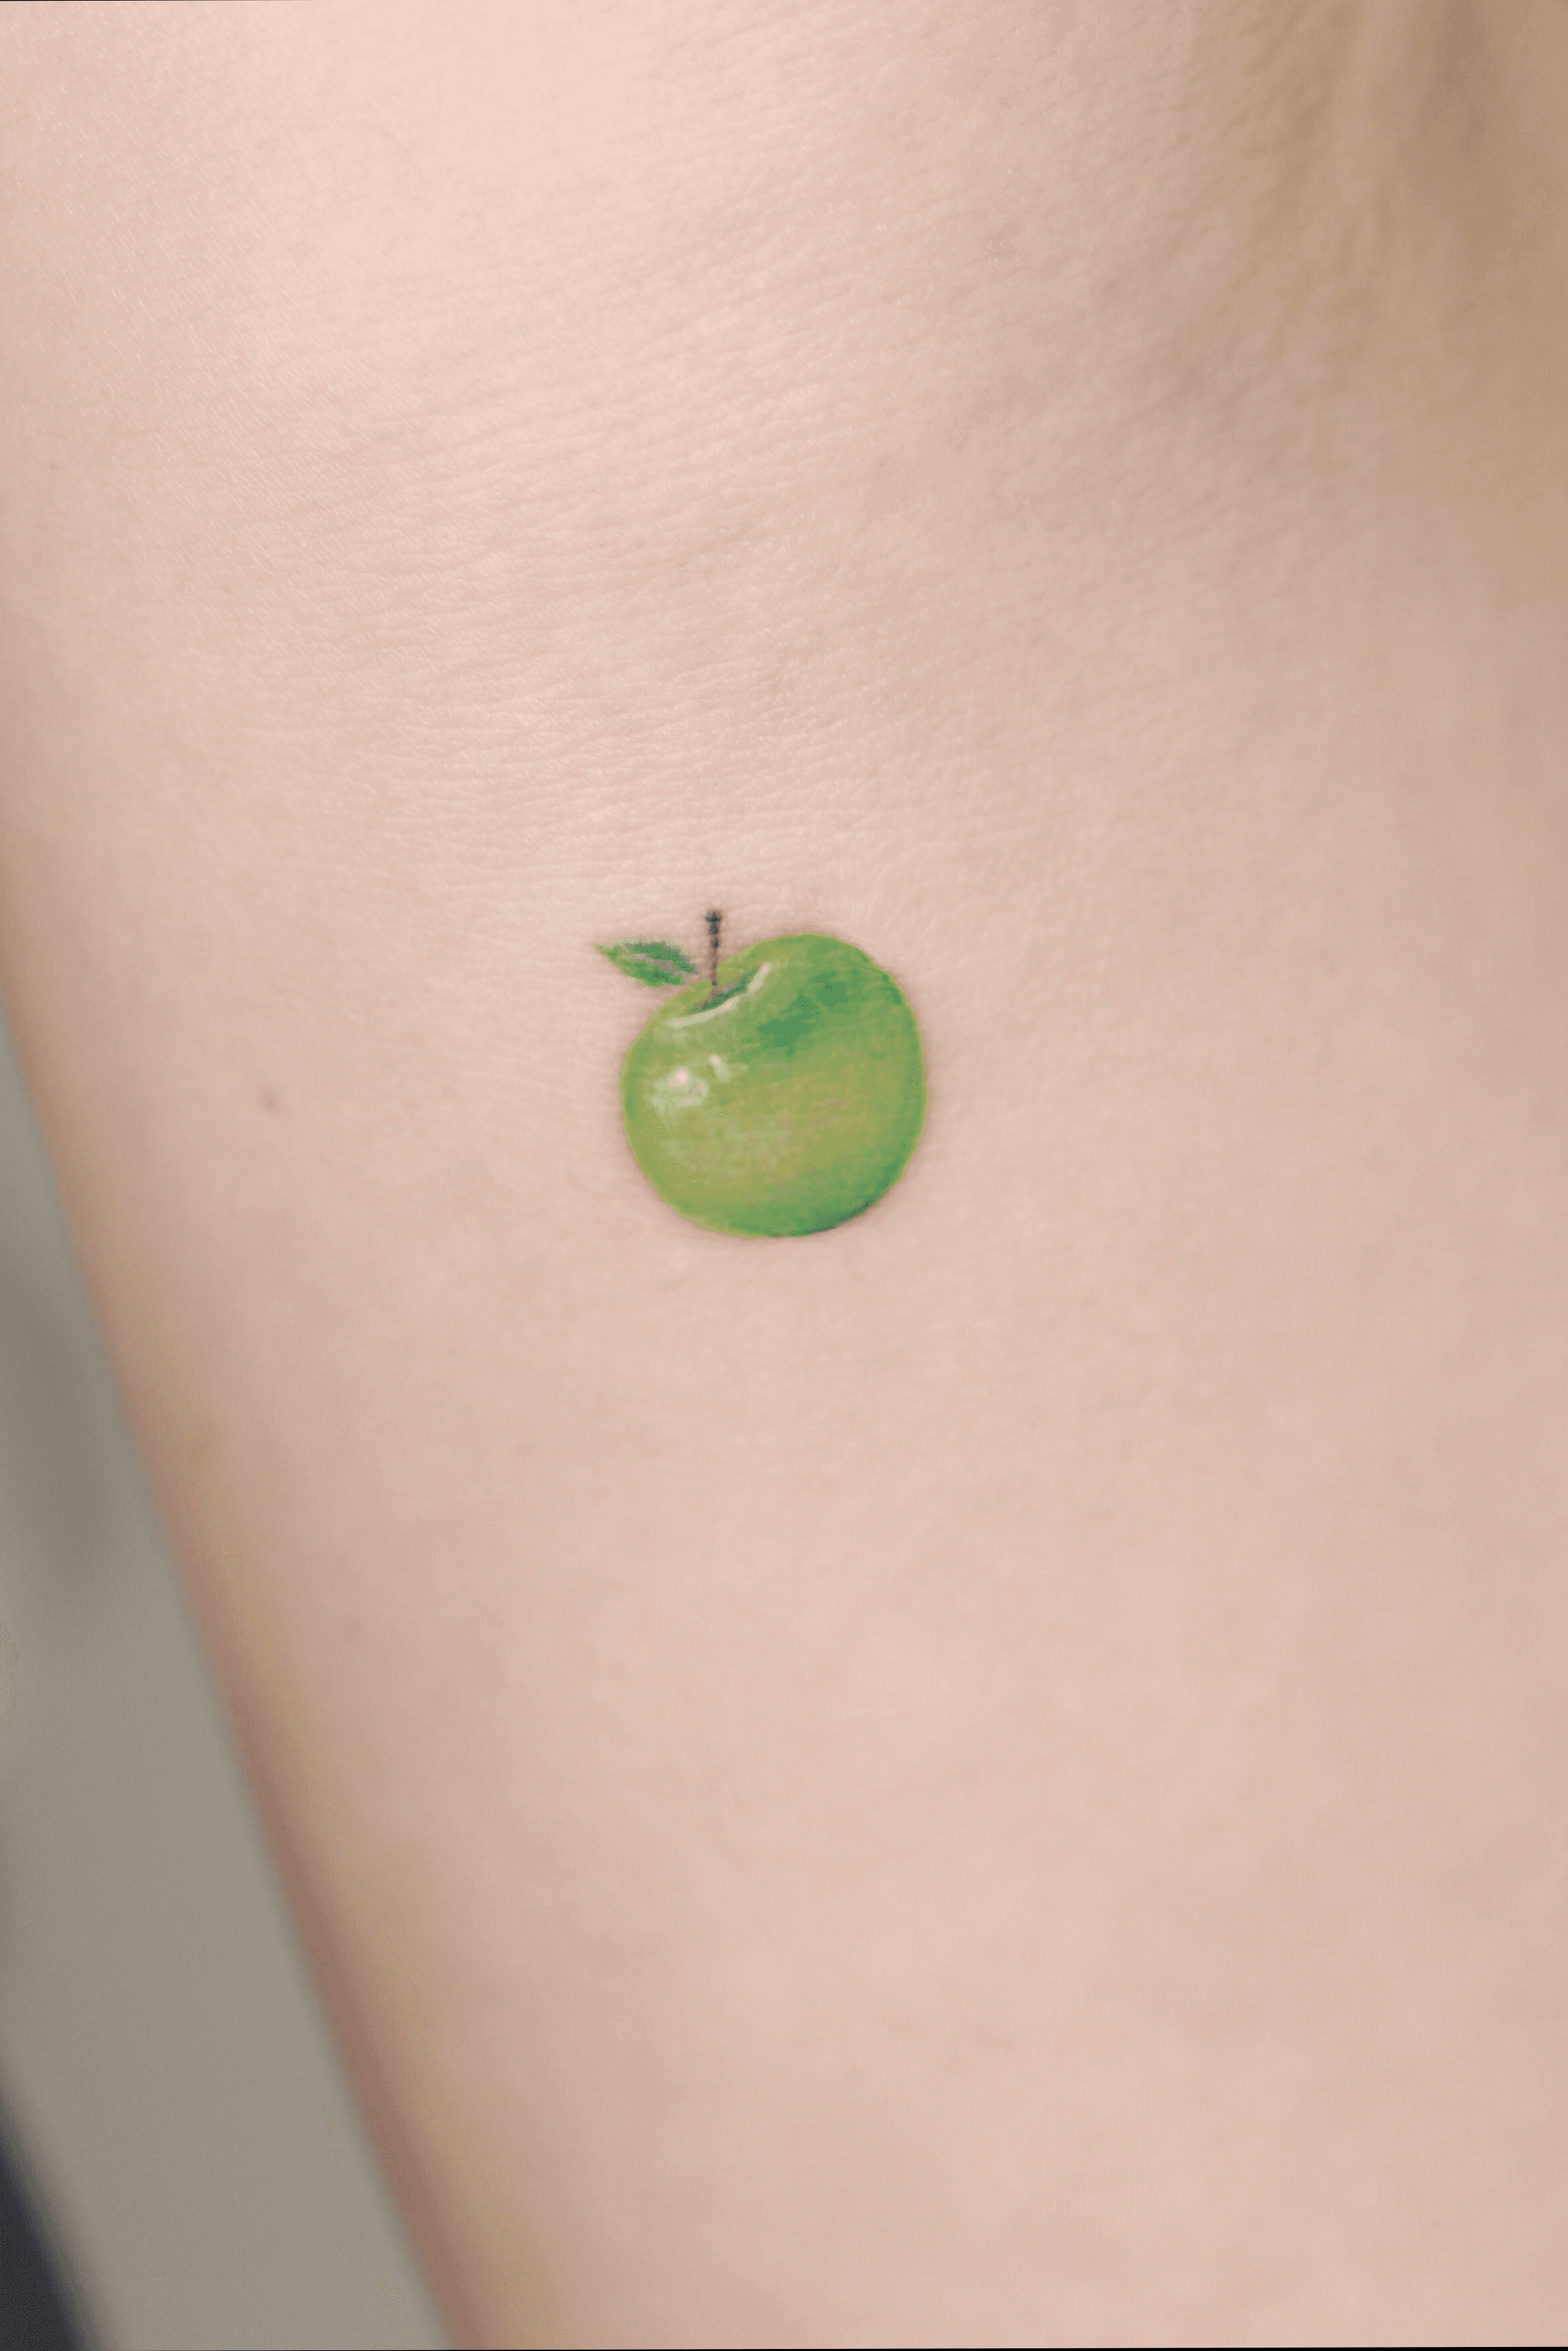 Small apple tattoo on the wrist